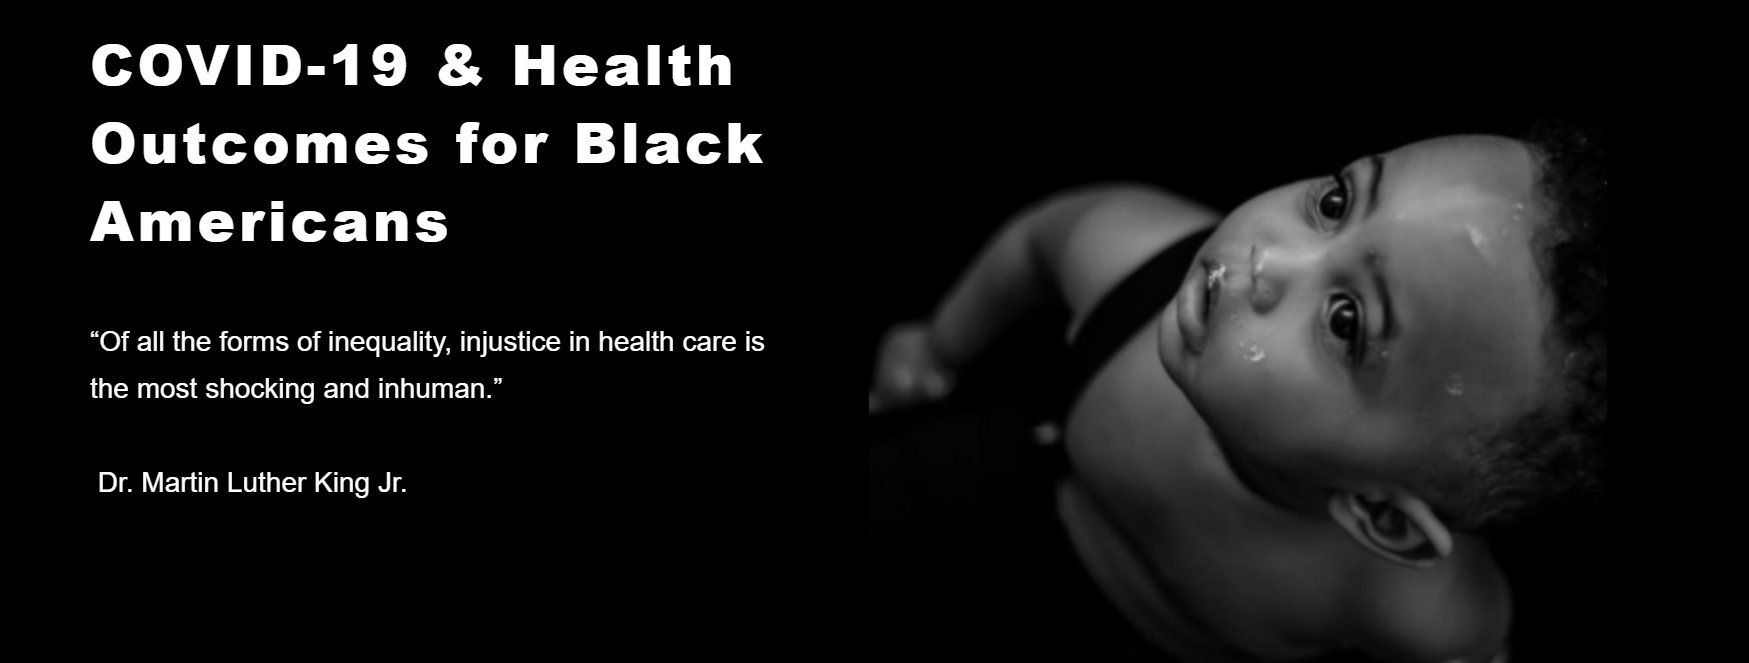 COVID-19 & Health Outcomes for Black Americans